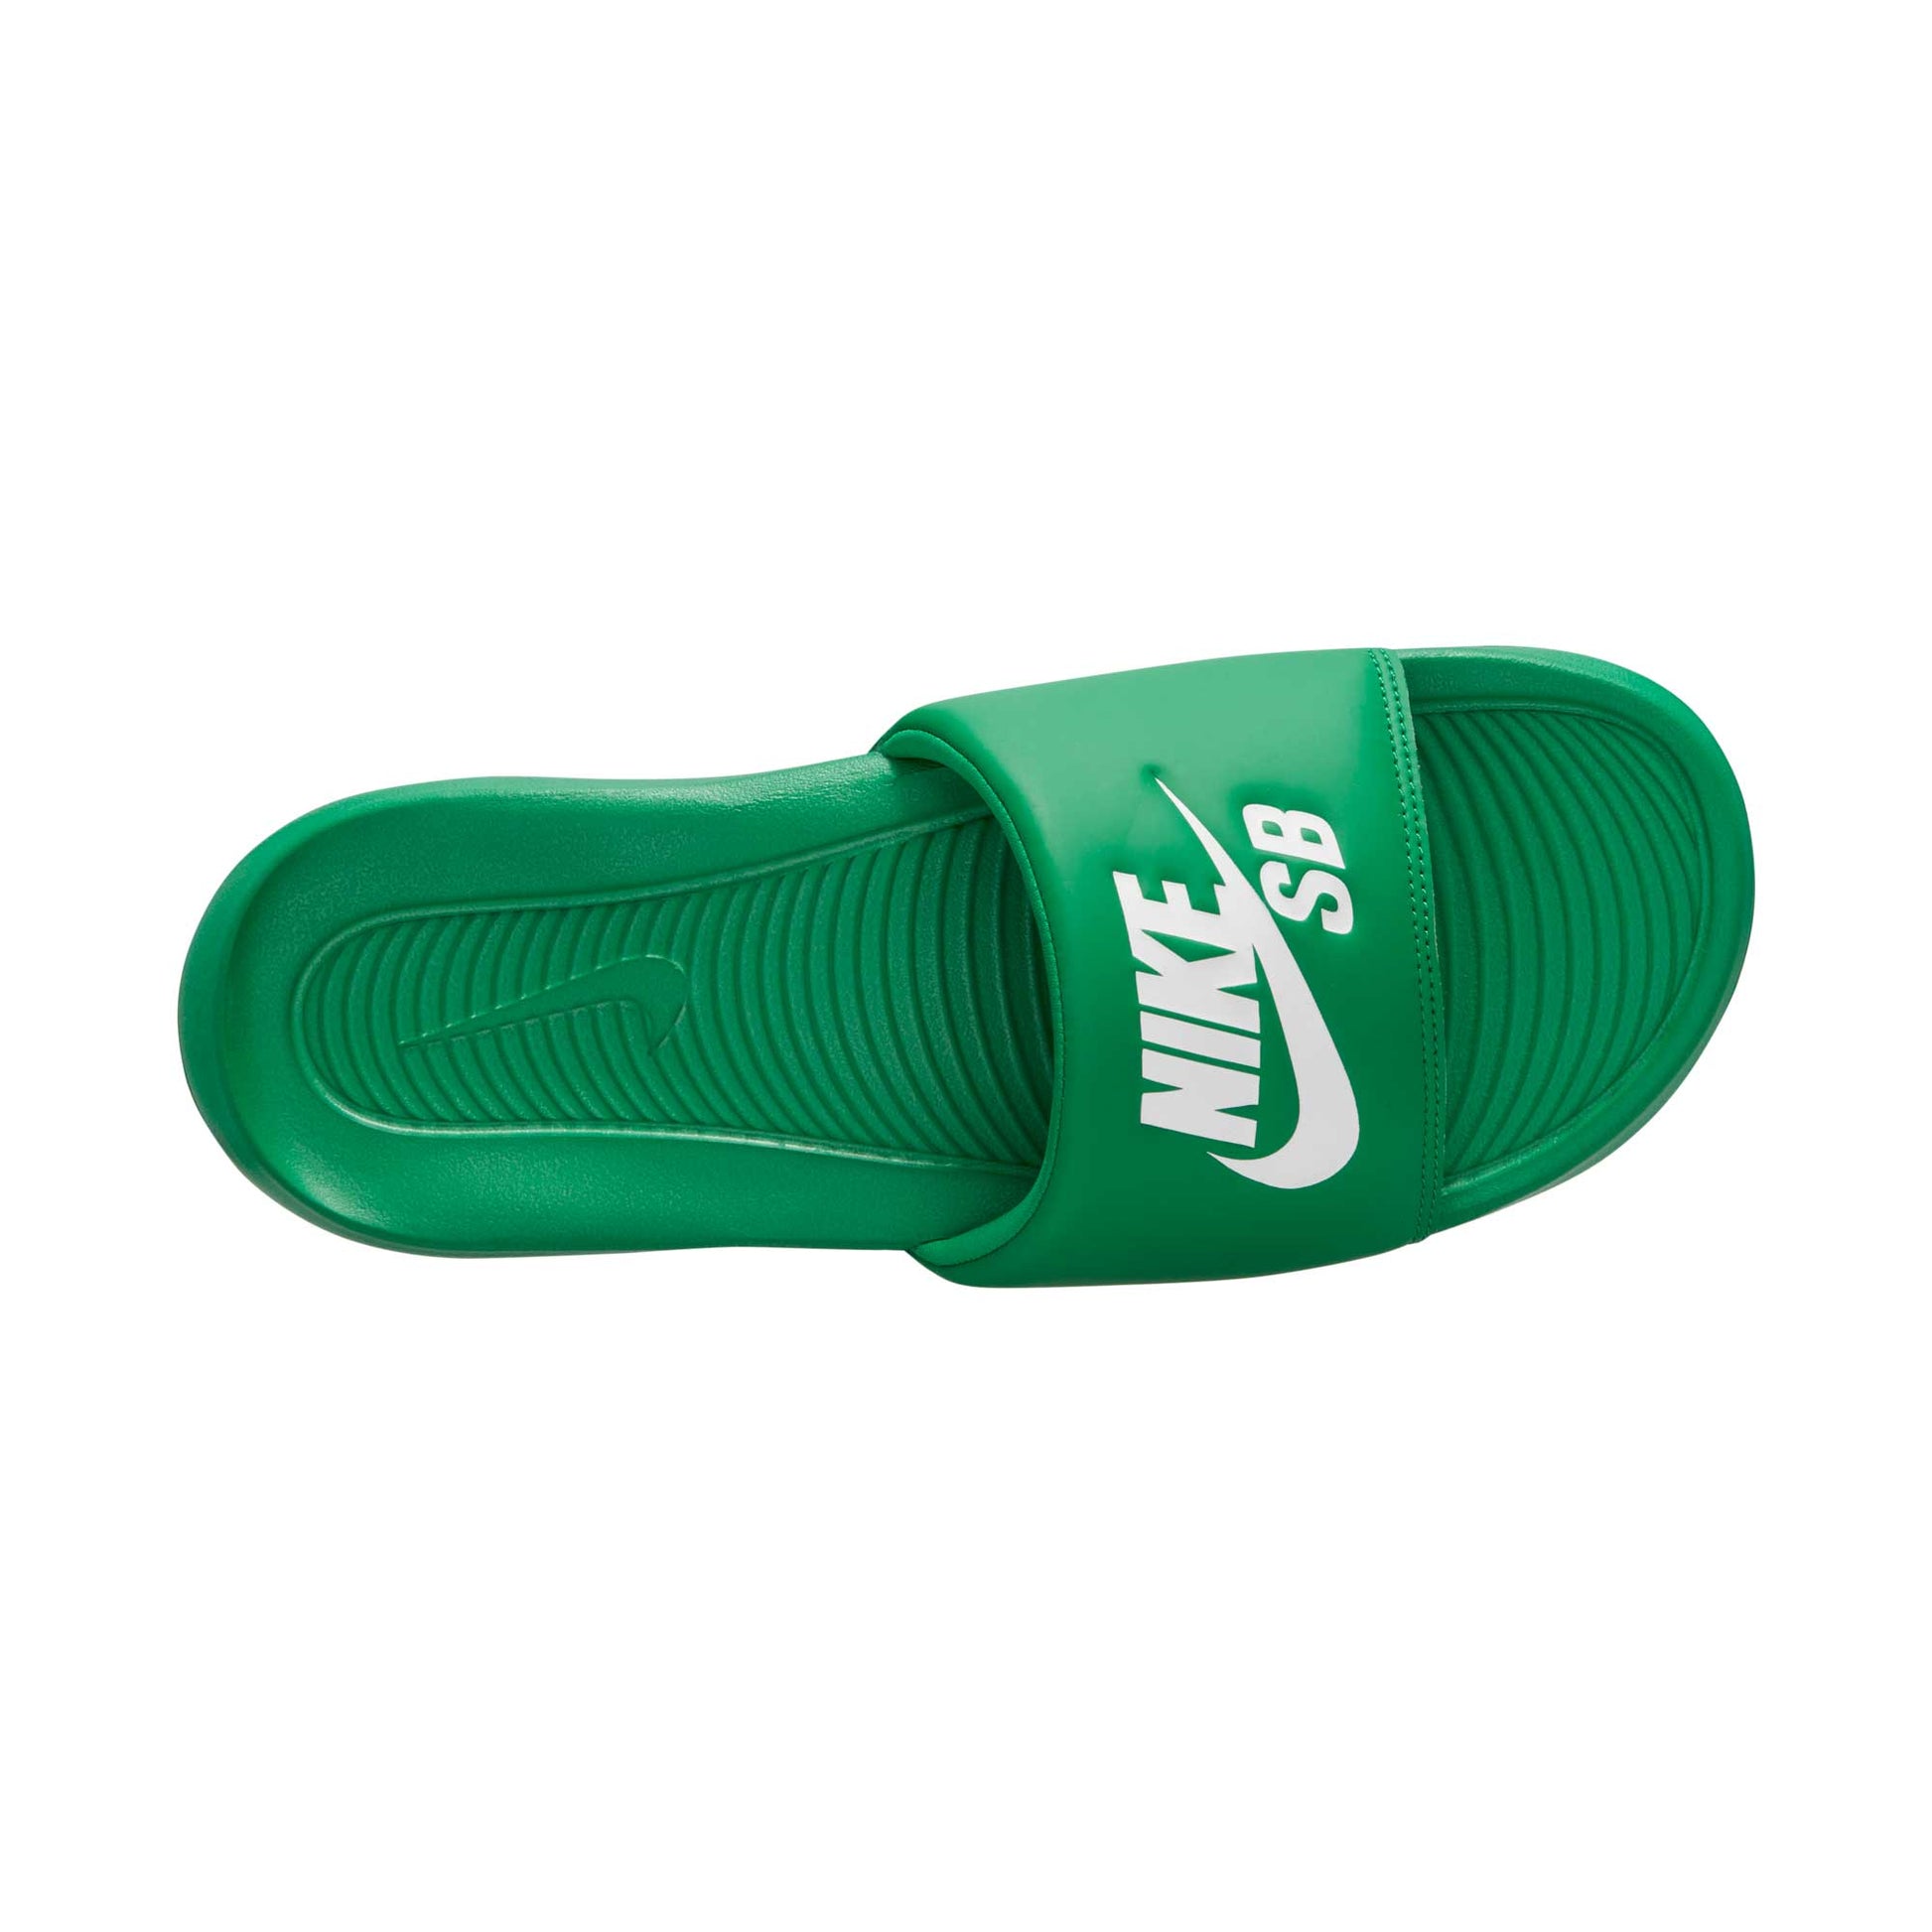 Nike SB Victori One, lucky green/white-lucky green - Tiki Room Skateboards - 8